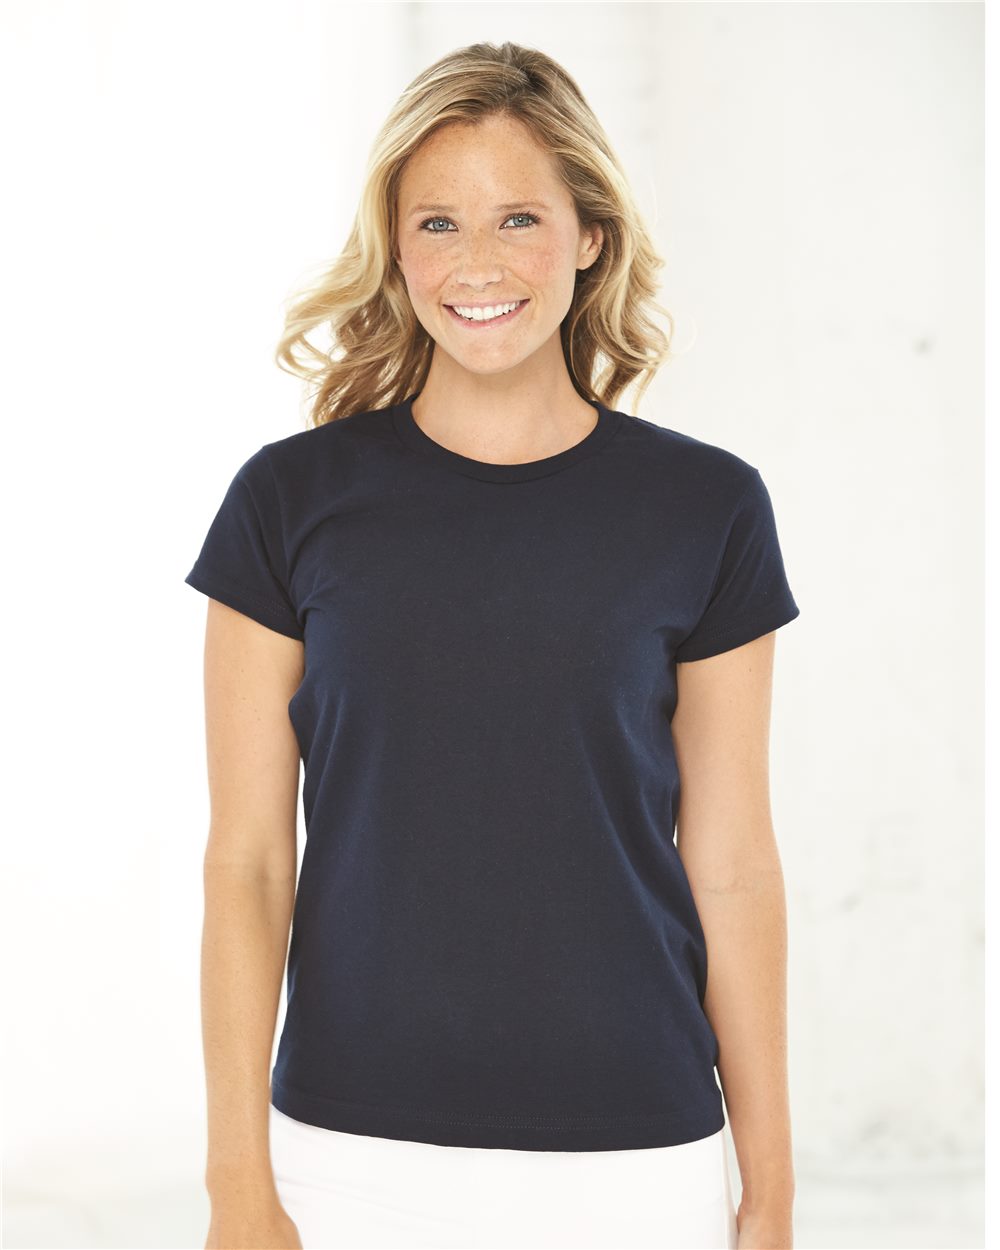 Bayside 3325 - Ladies' USA Made Short Sleeve Shirt